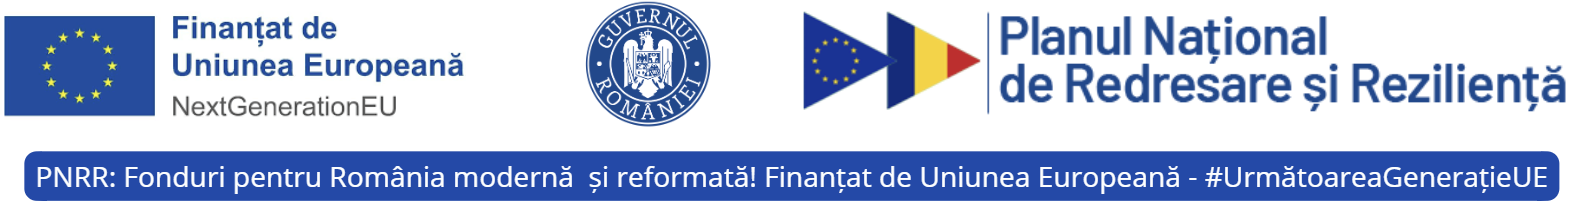 EU_logo_Romania_Kormanya_logo_PNRR_logo